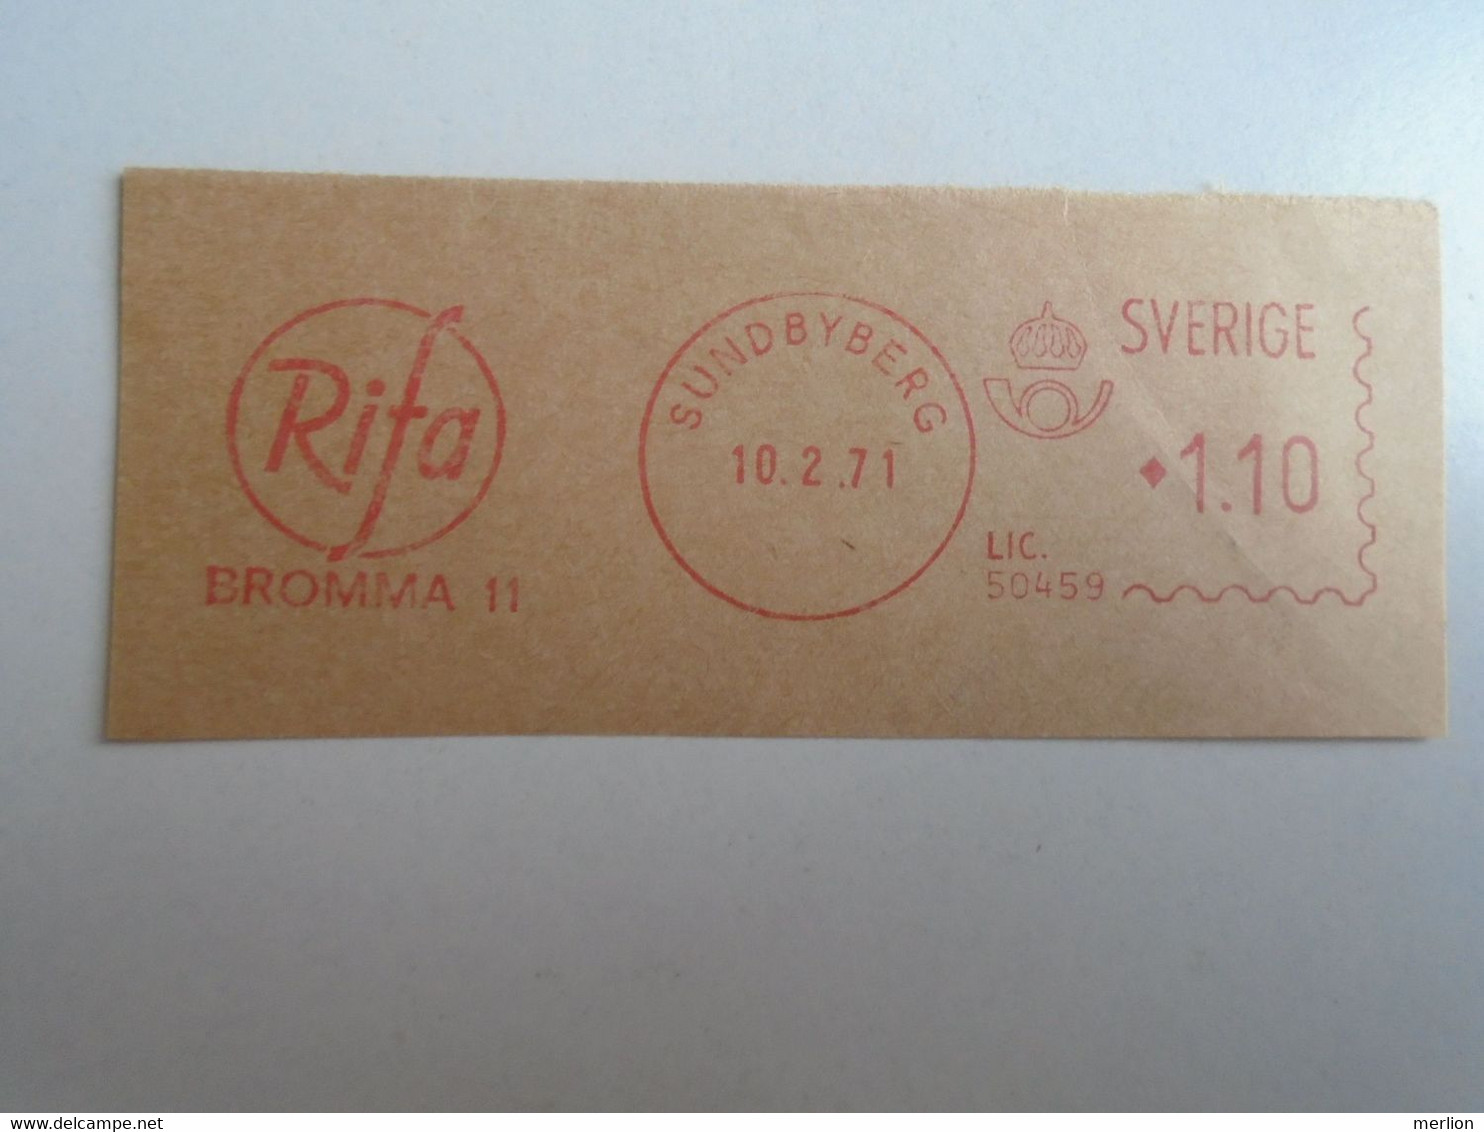 D191861  Sweden Sverige   RIFA  -Sundbyberg    1971  - 1.10 K - RED METER  FREISTEMPEL  EMA - Machine Labels [ATM]